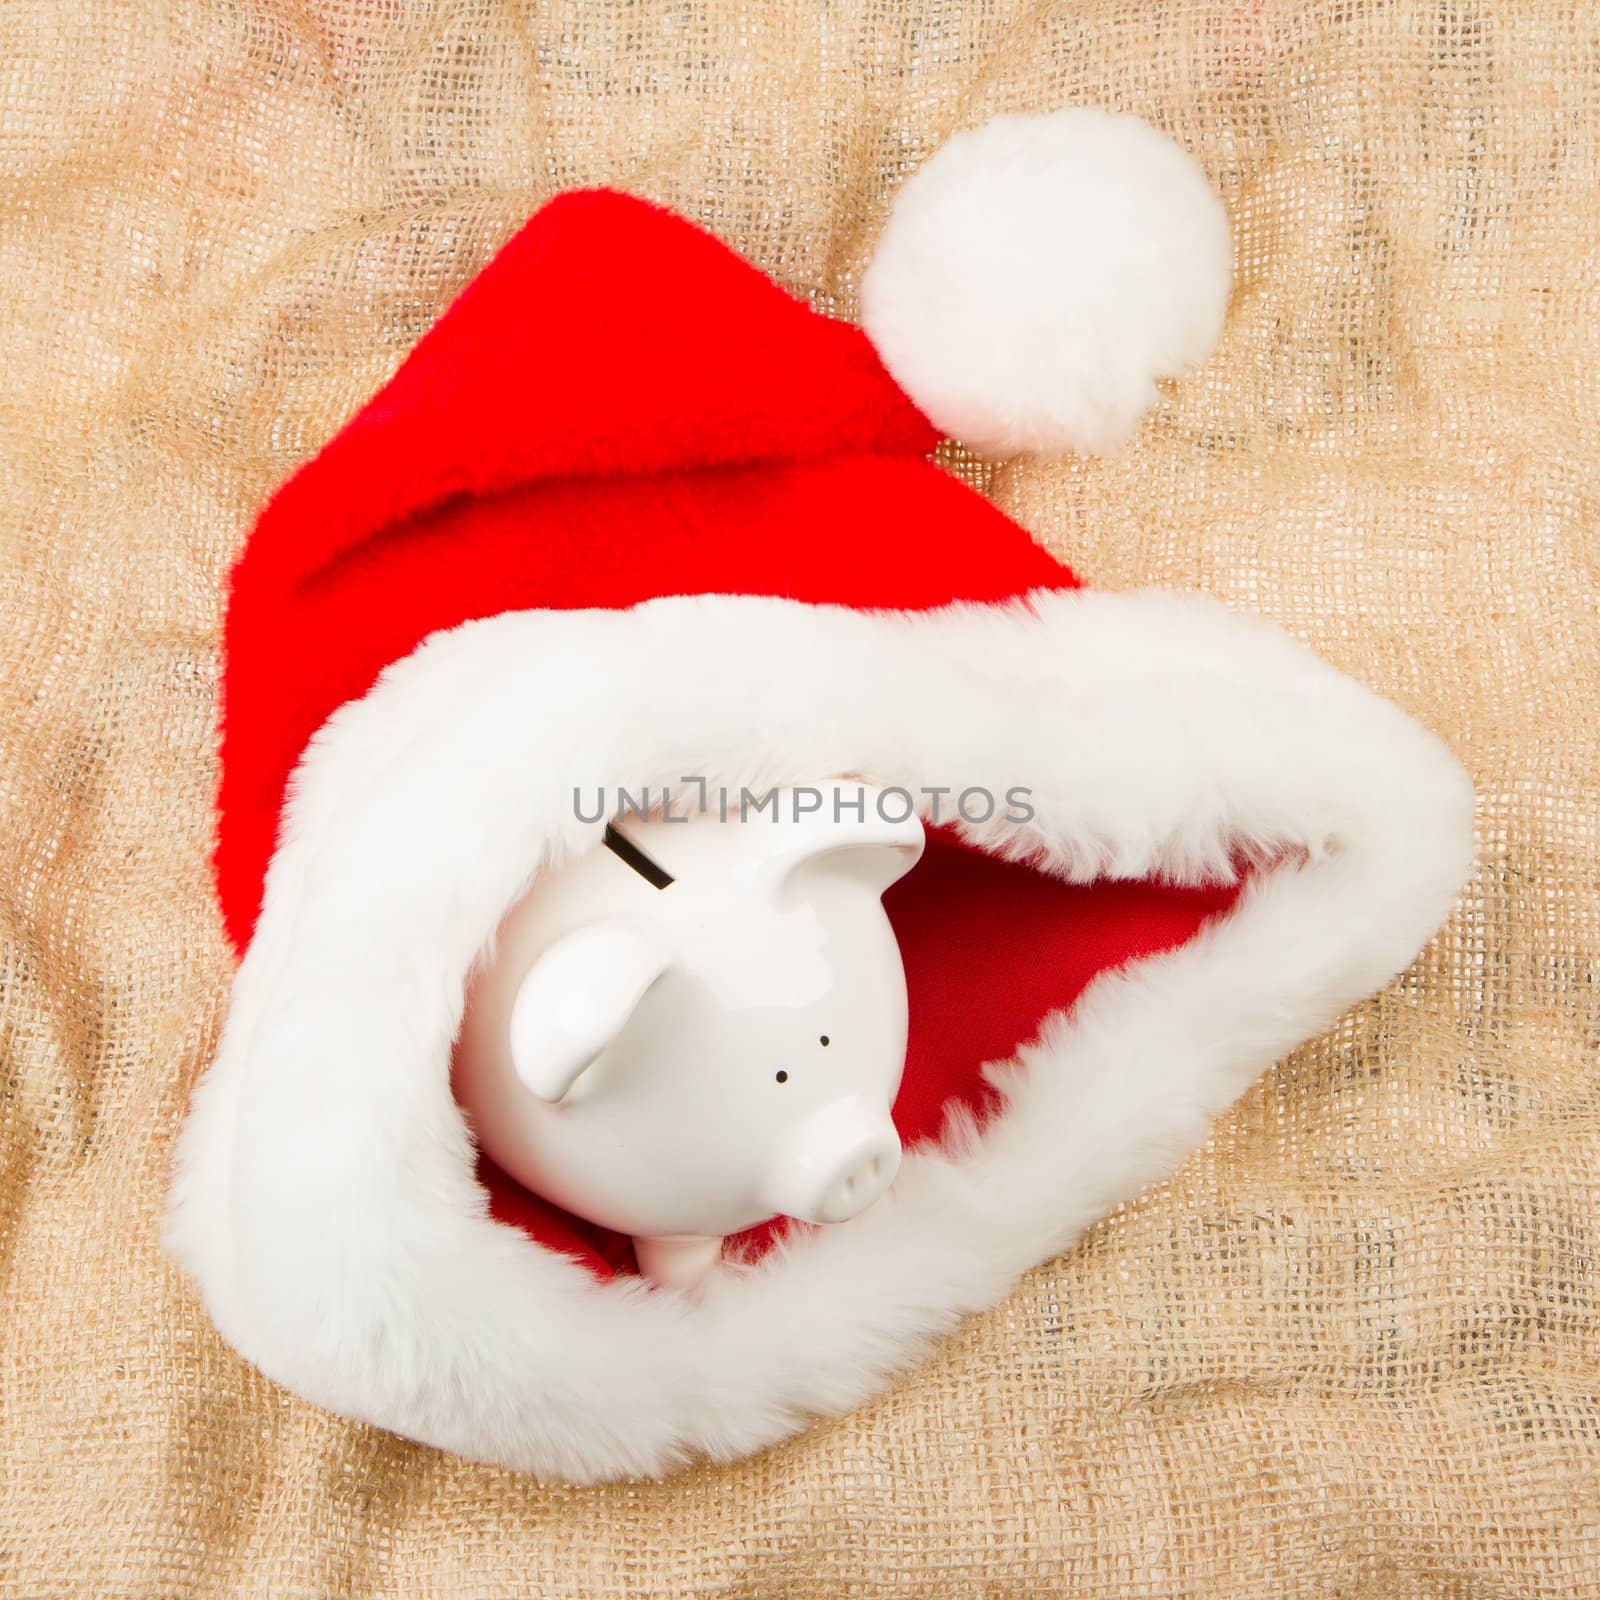 Piggybank guarding Santa's crisis budget, one dollar in his hat